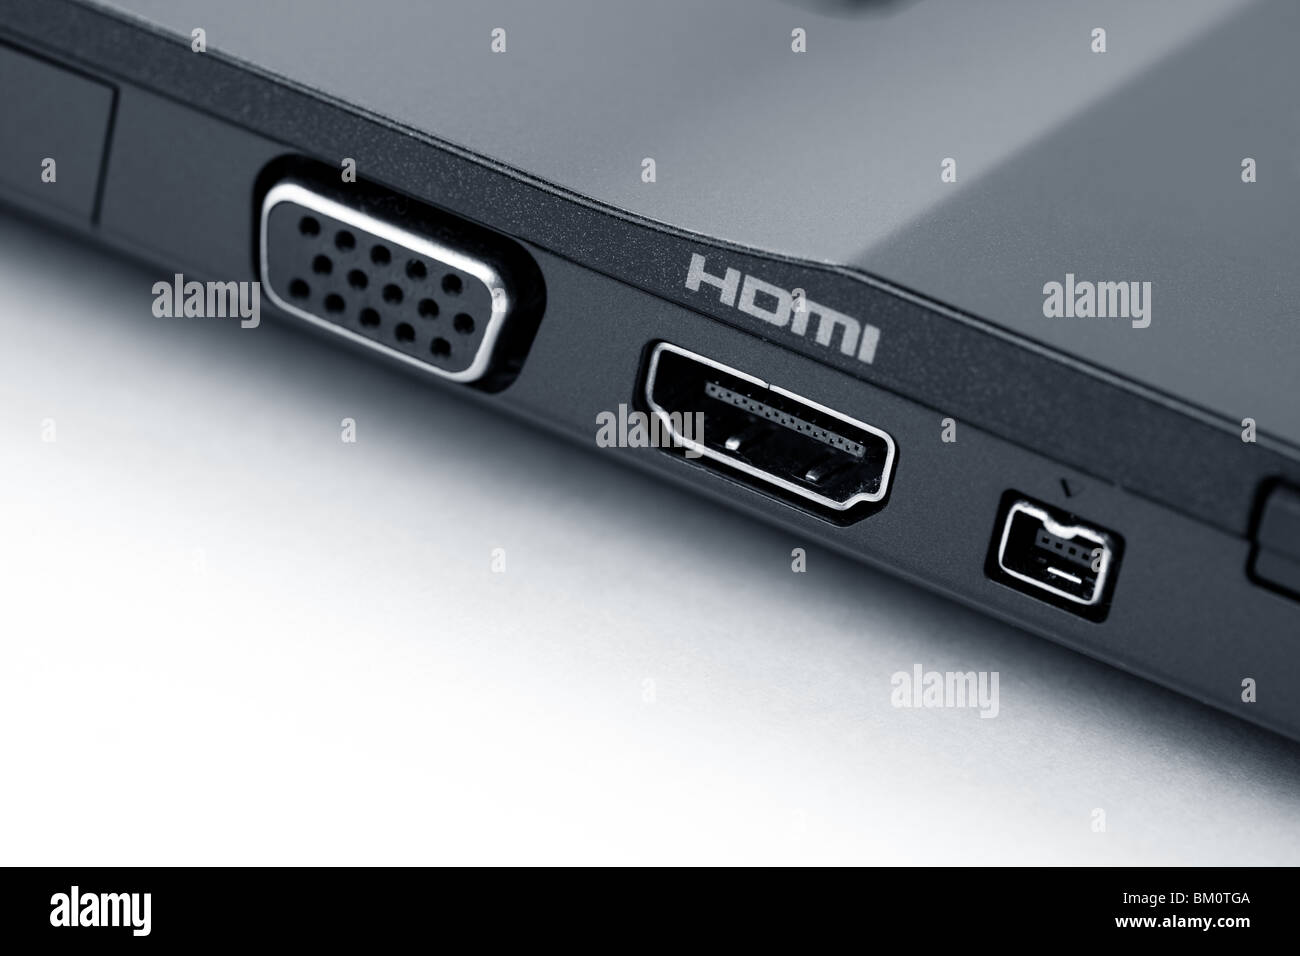 Laptop hdmi connection close up -Fotos und -Bildmaterial in hoher Auflösung  – Alamy